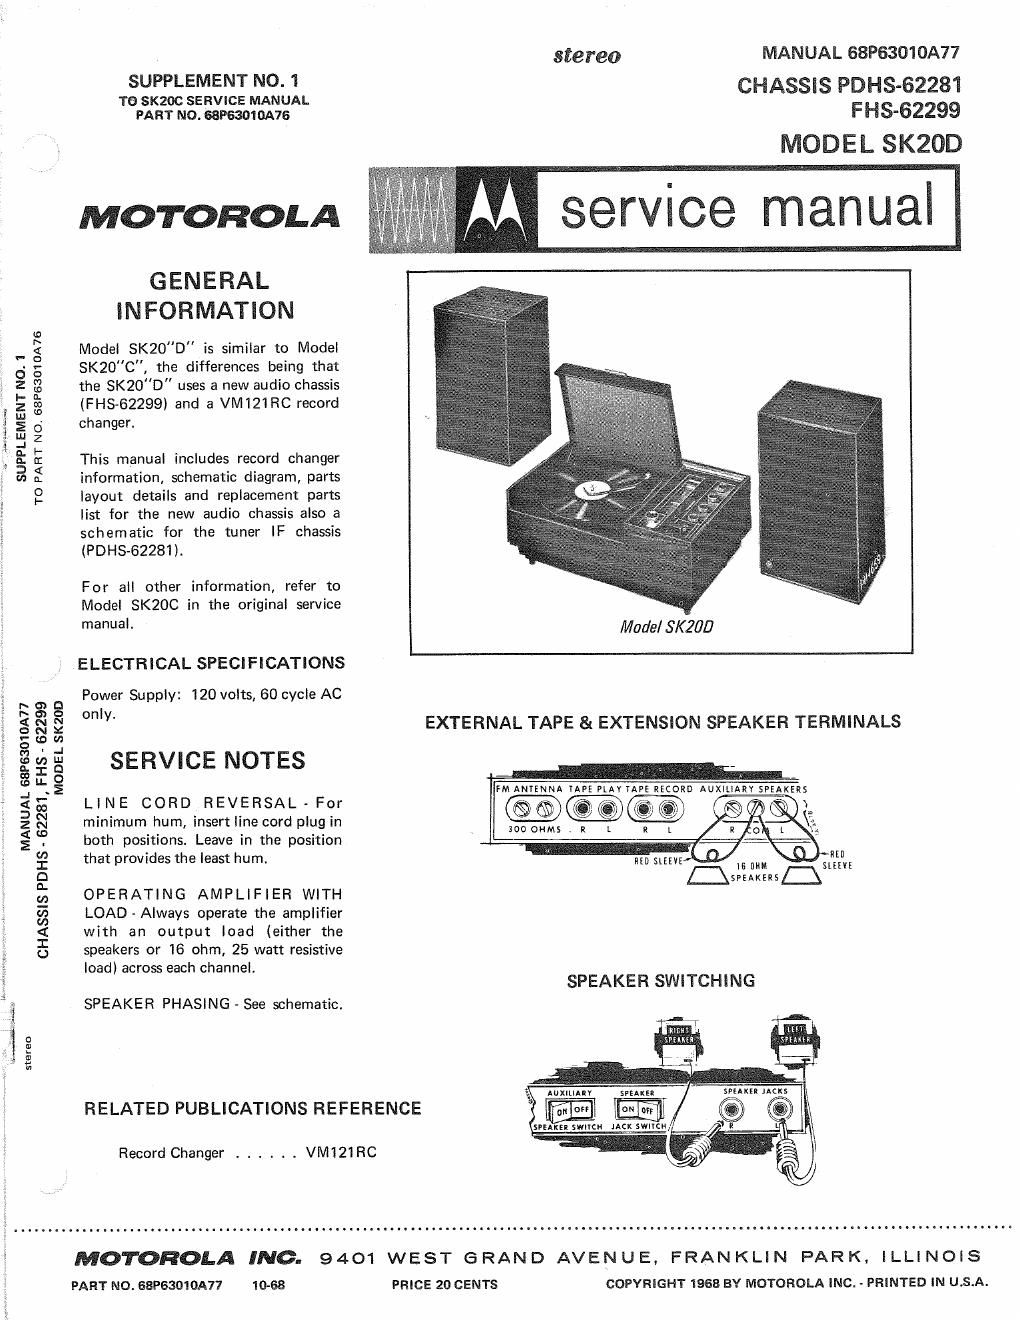 motorola sk 20 d service manual